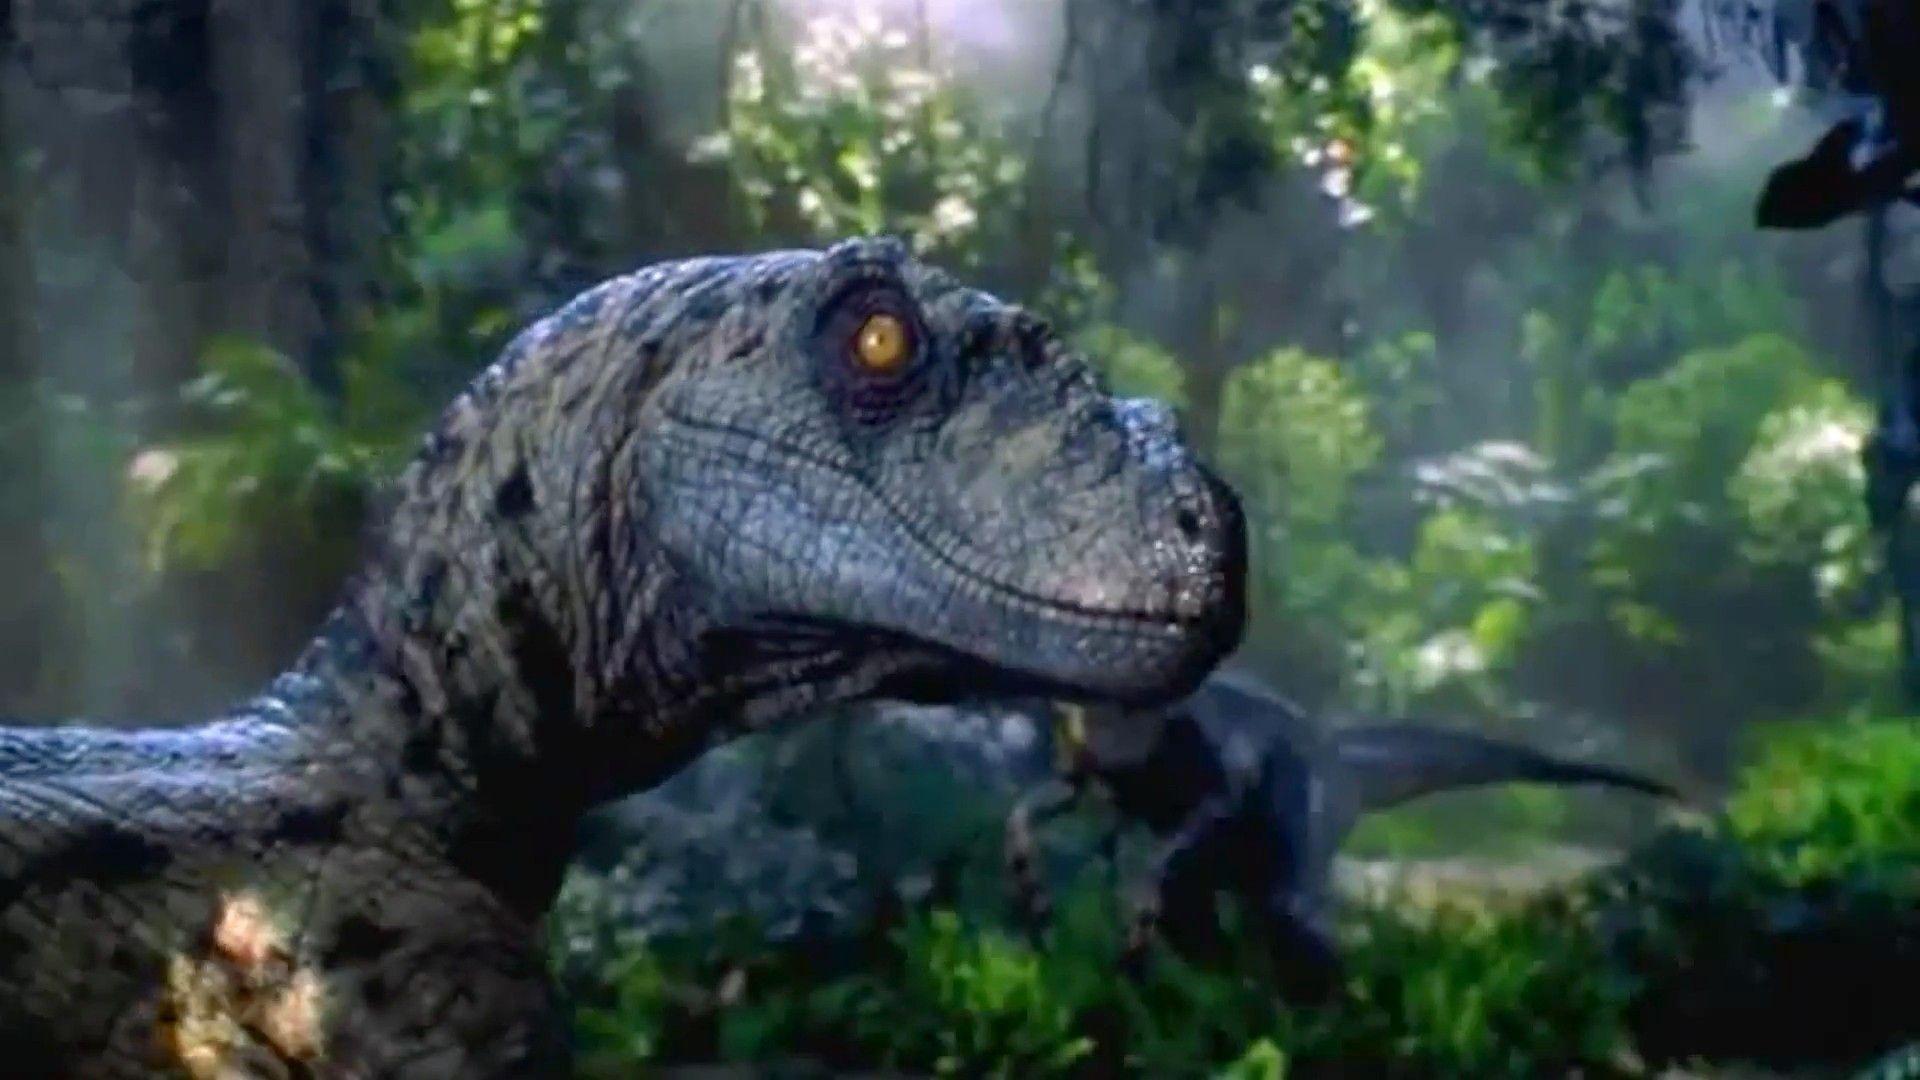 Jurassic Park Theme Song. Movie Theme Songs & TV Soundtracks